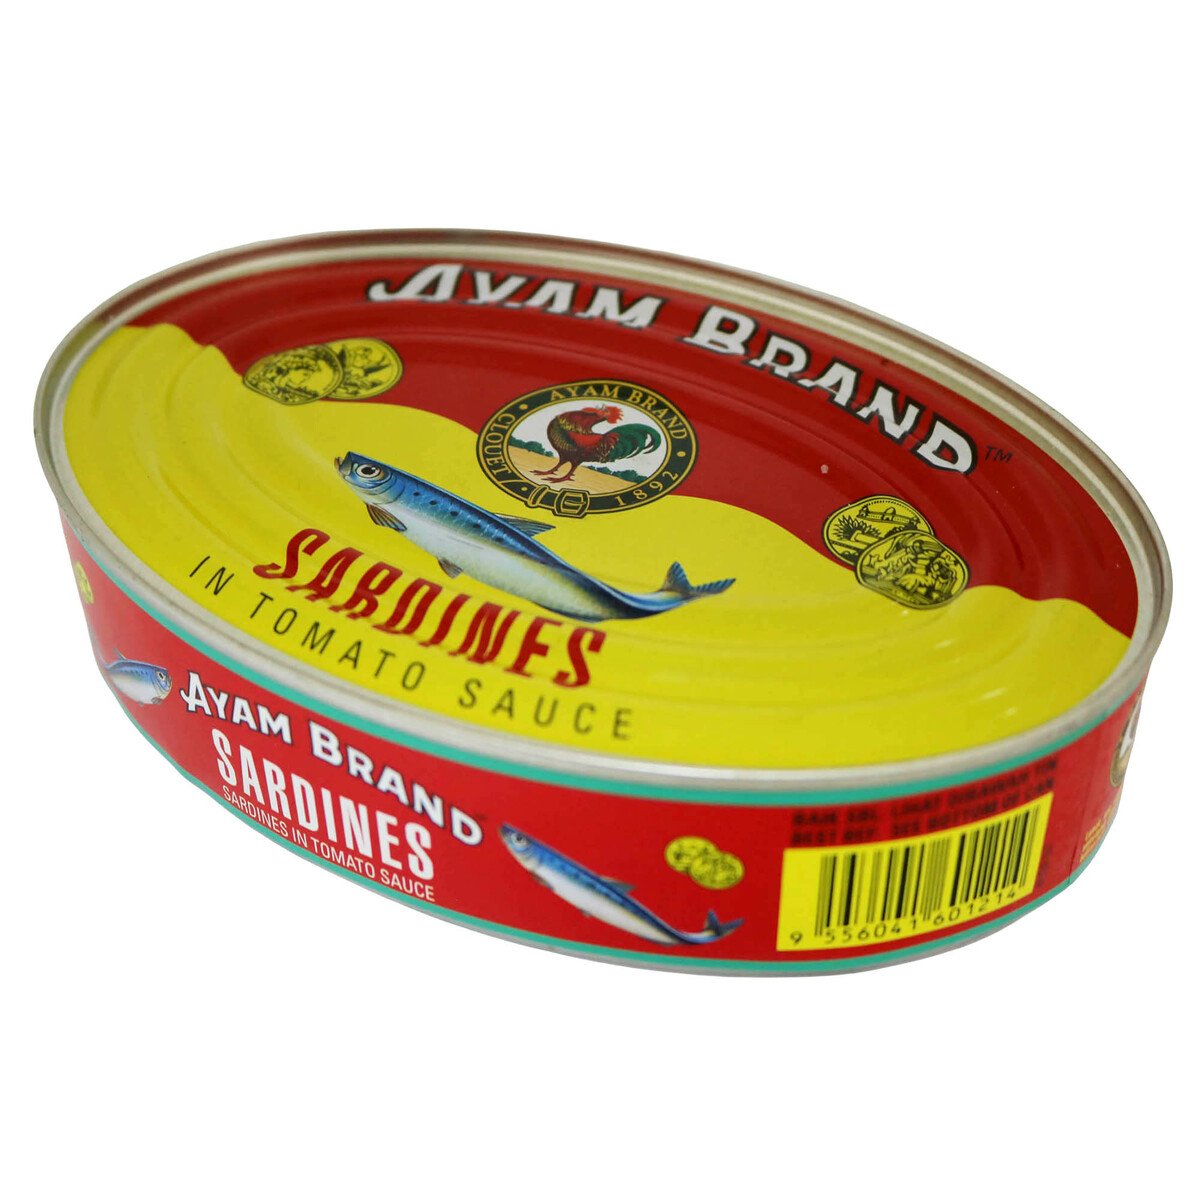 Ayam Brand Sardines Oval 425g